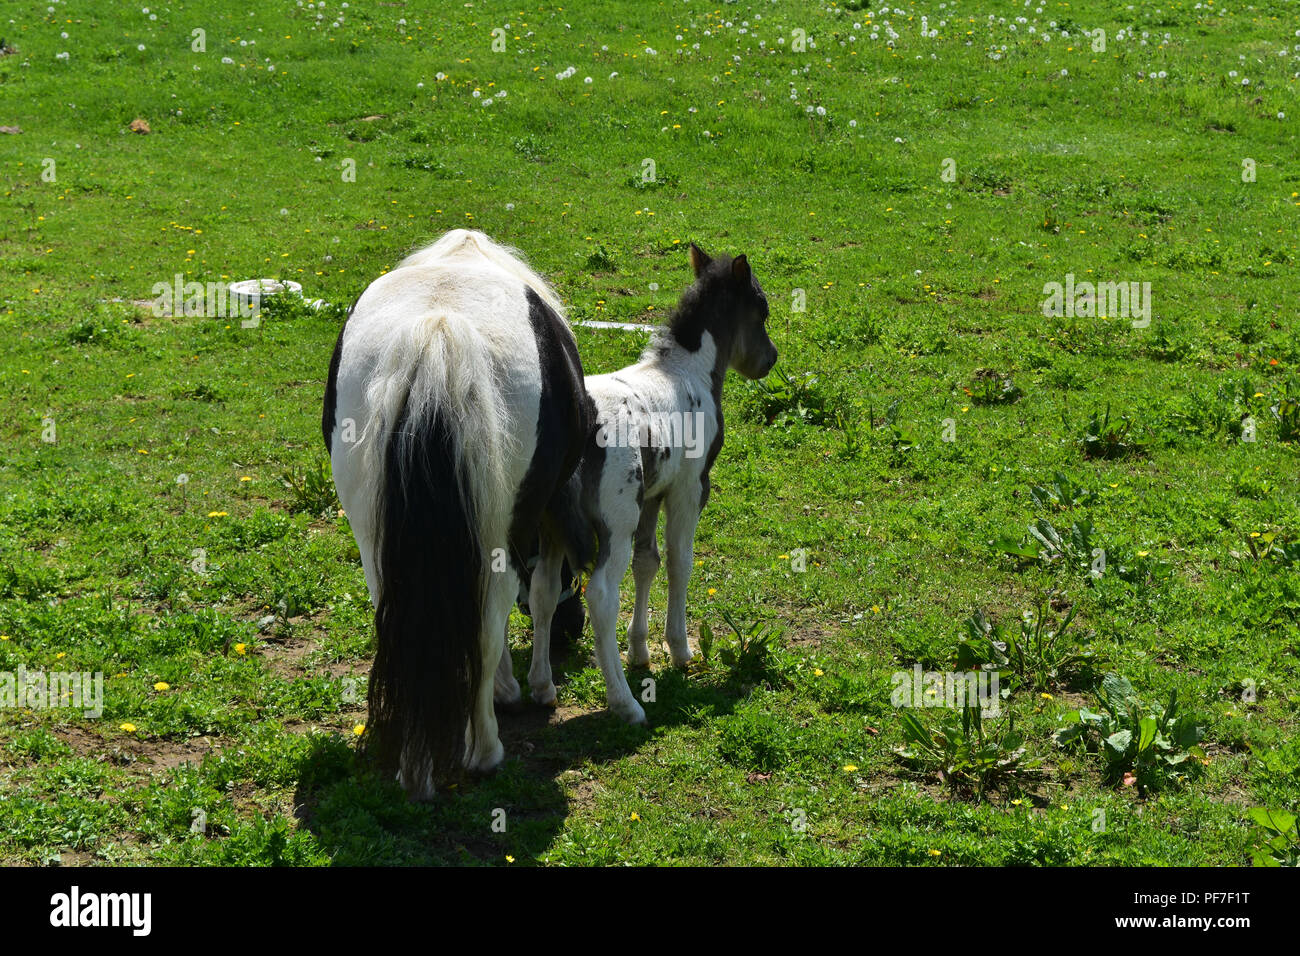 Black and white mini horse family in a grassy pasture. Stock Photo